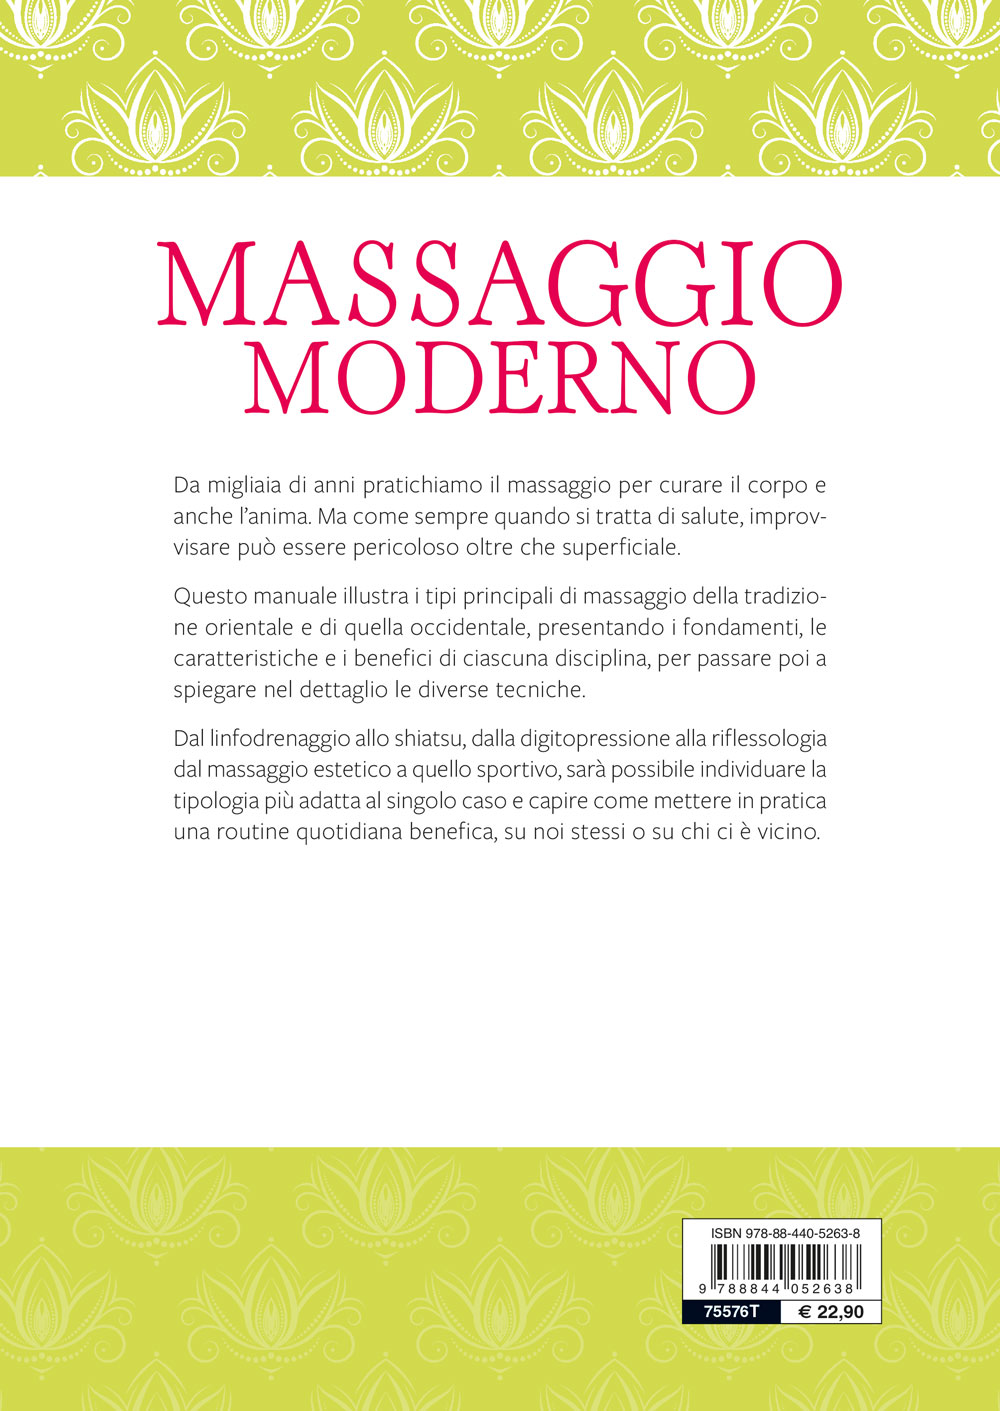 Massaggio moderno